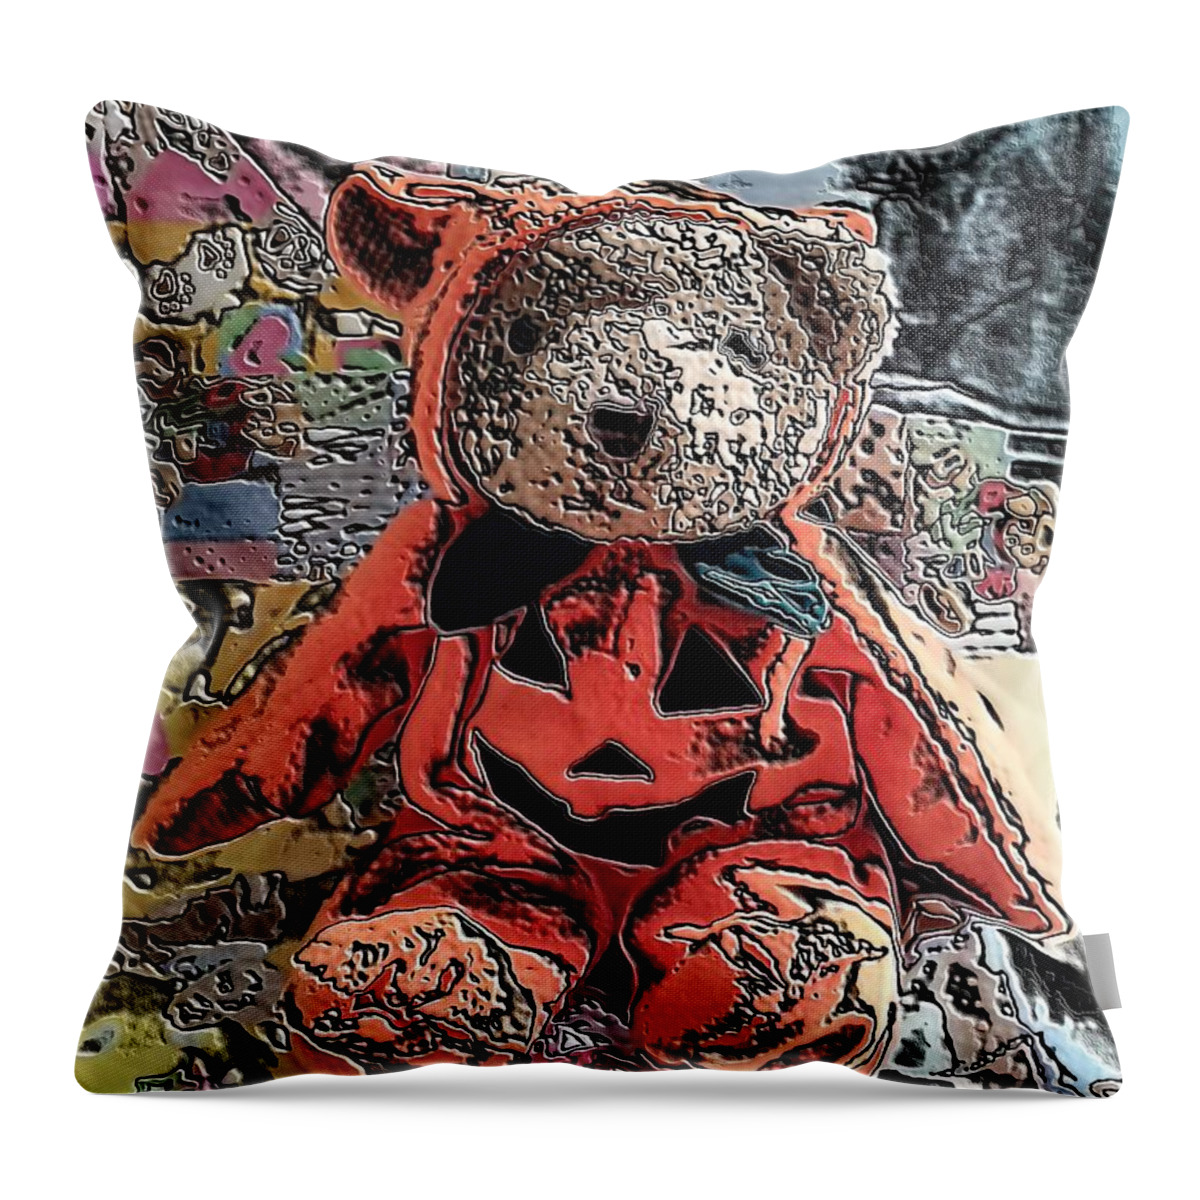 Stuffed Animal Throw Pillow featuring the digital art Teddy Bear #5 by Belinda Cox